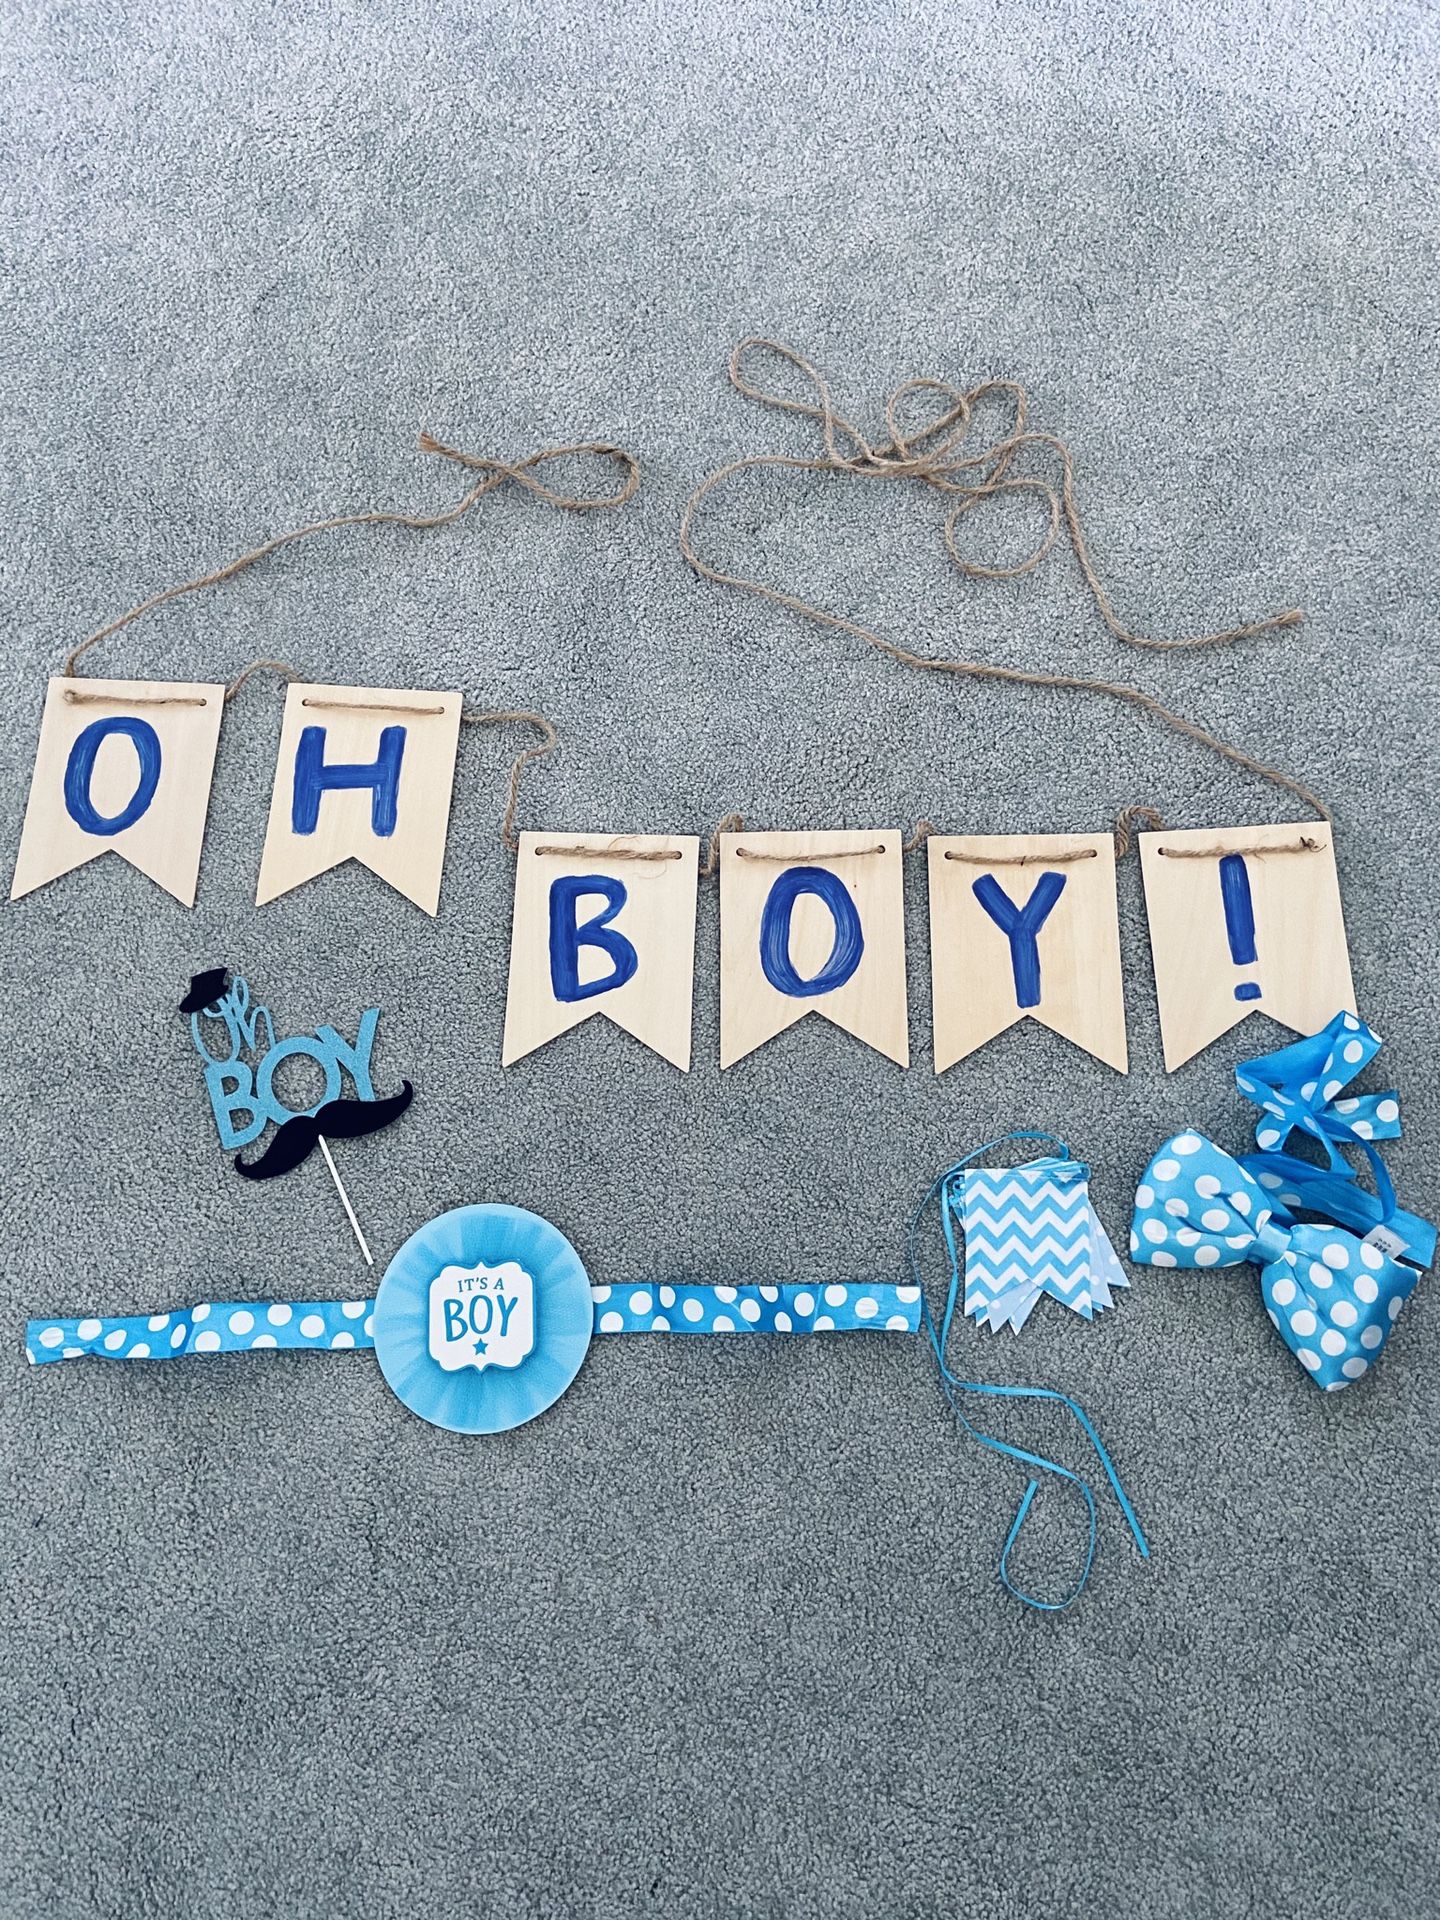 Handmade Baby Shower decorations - BOY